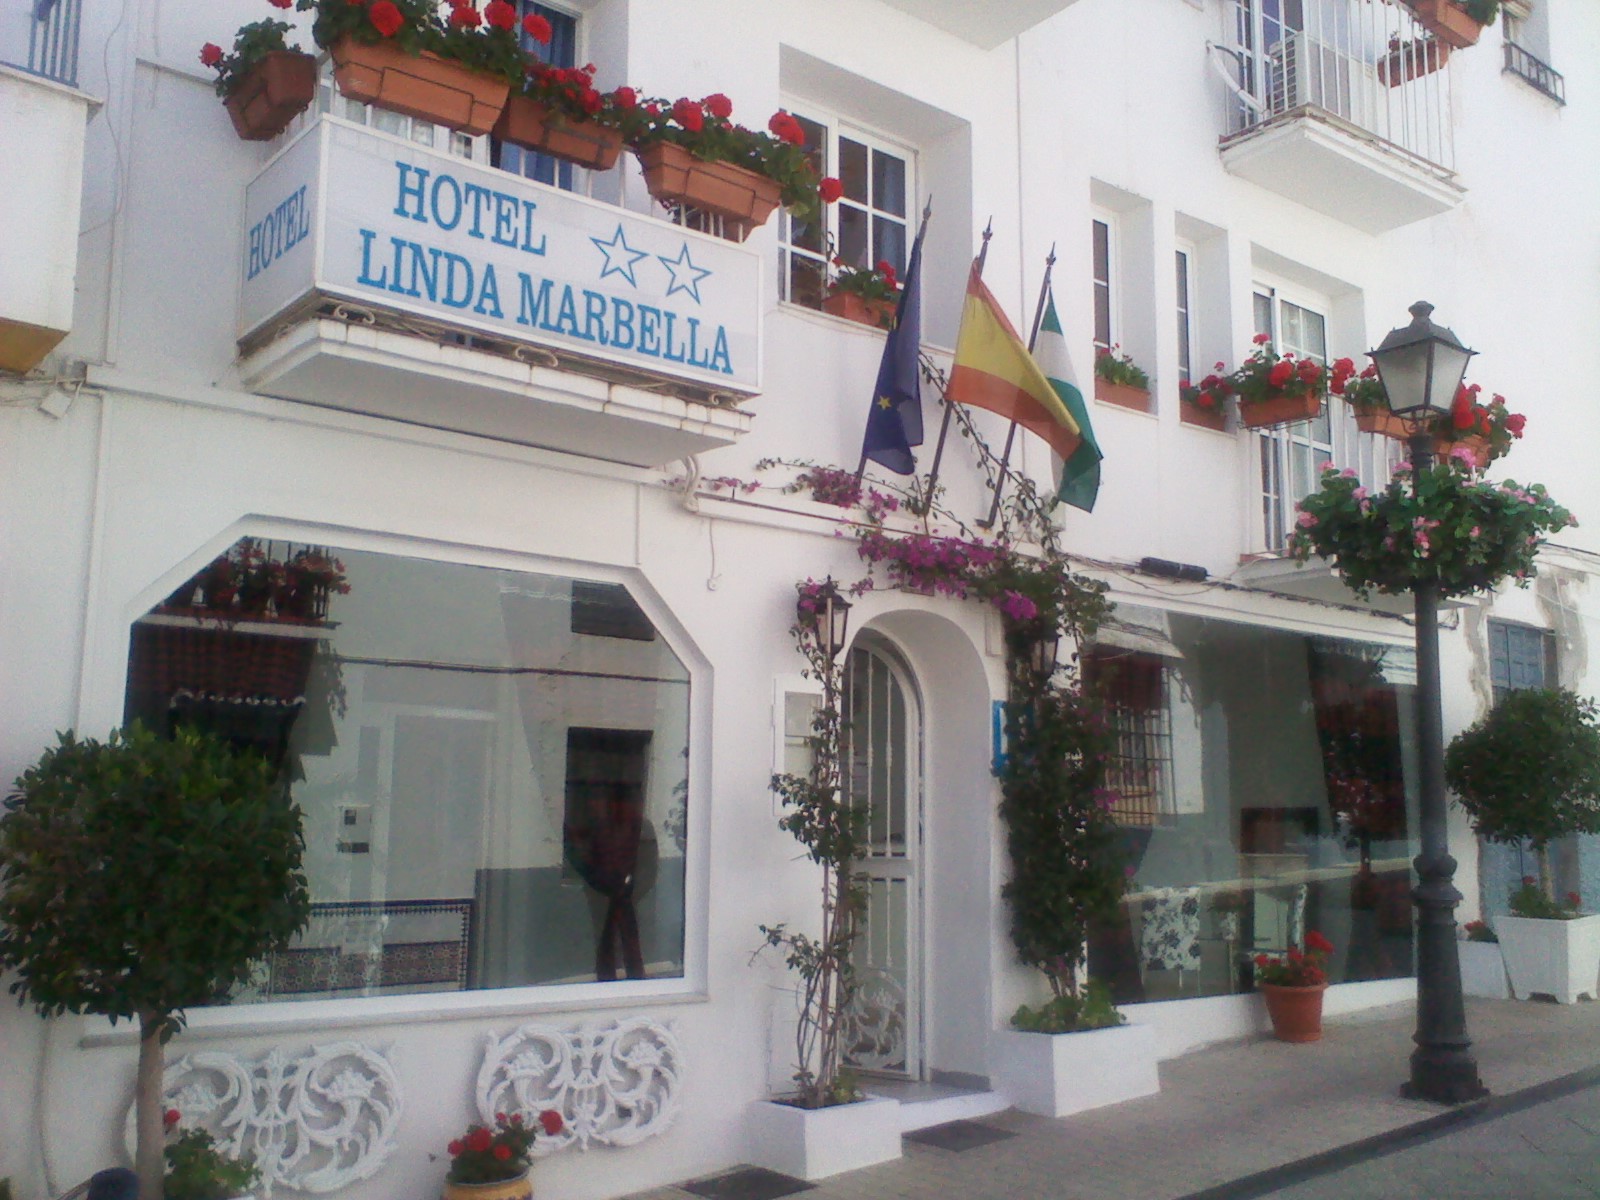 Hotel Linda Marbella